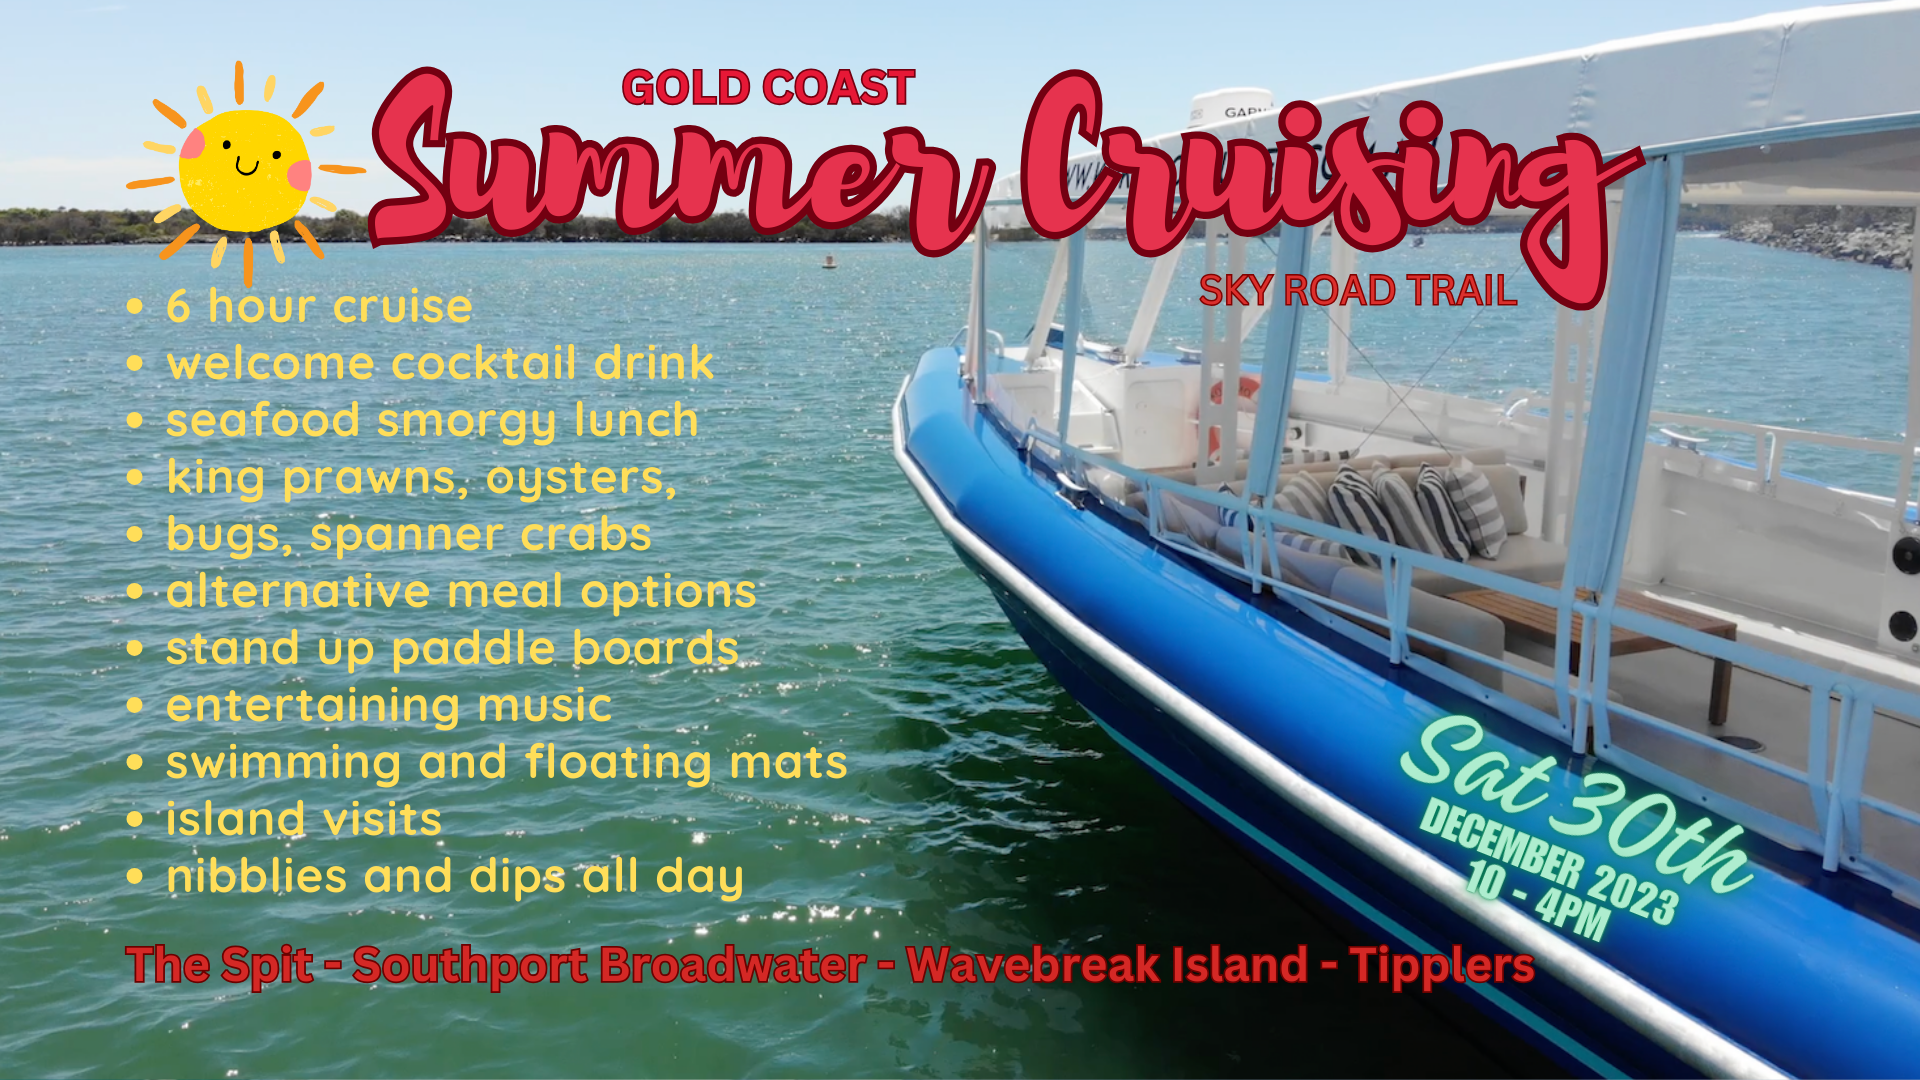 Gold Coast Summer Cruising on Kokomo Charter